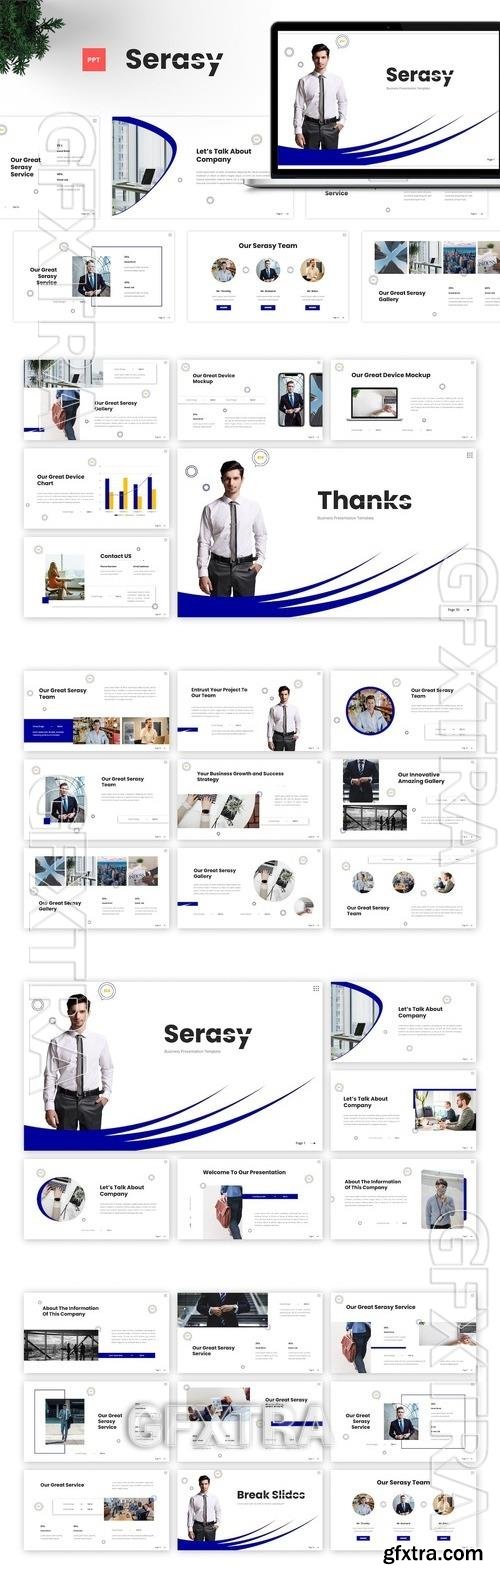 Serasy - Business Powerpoint E98H8HR